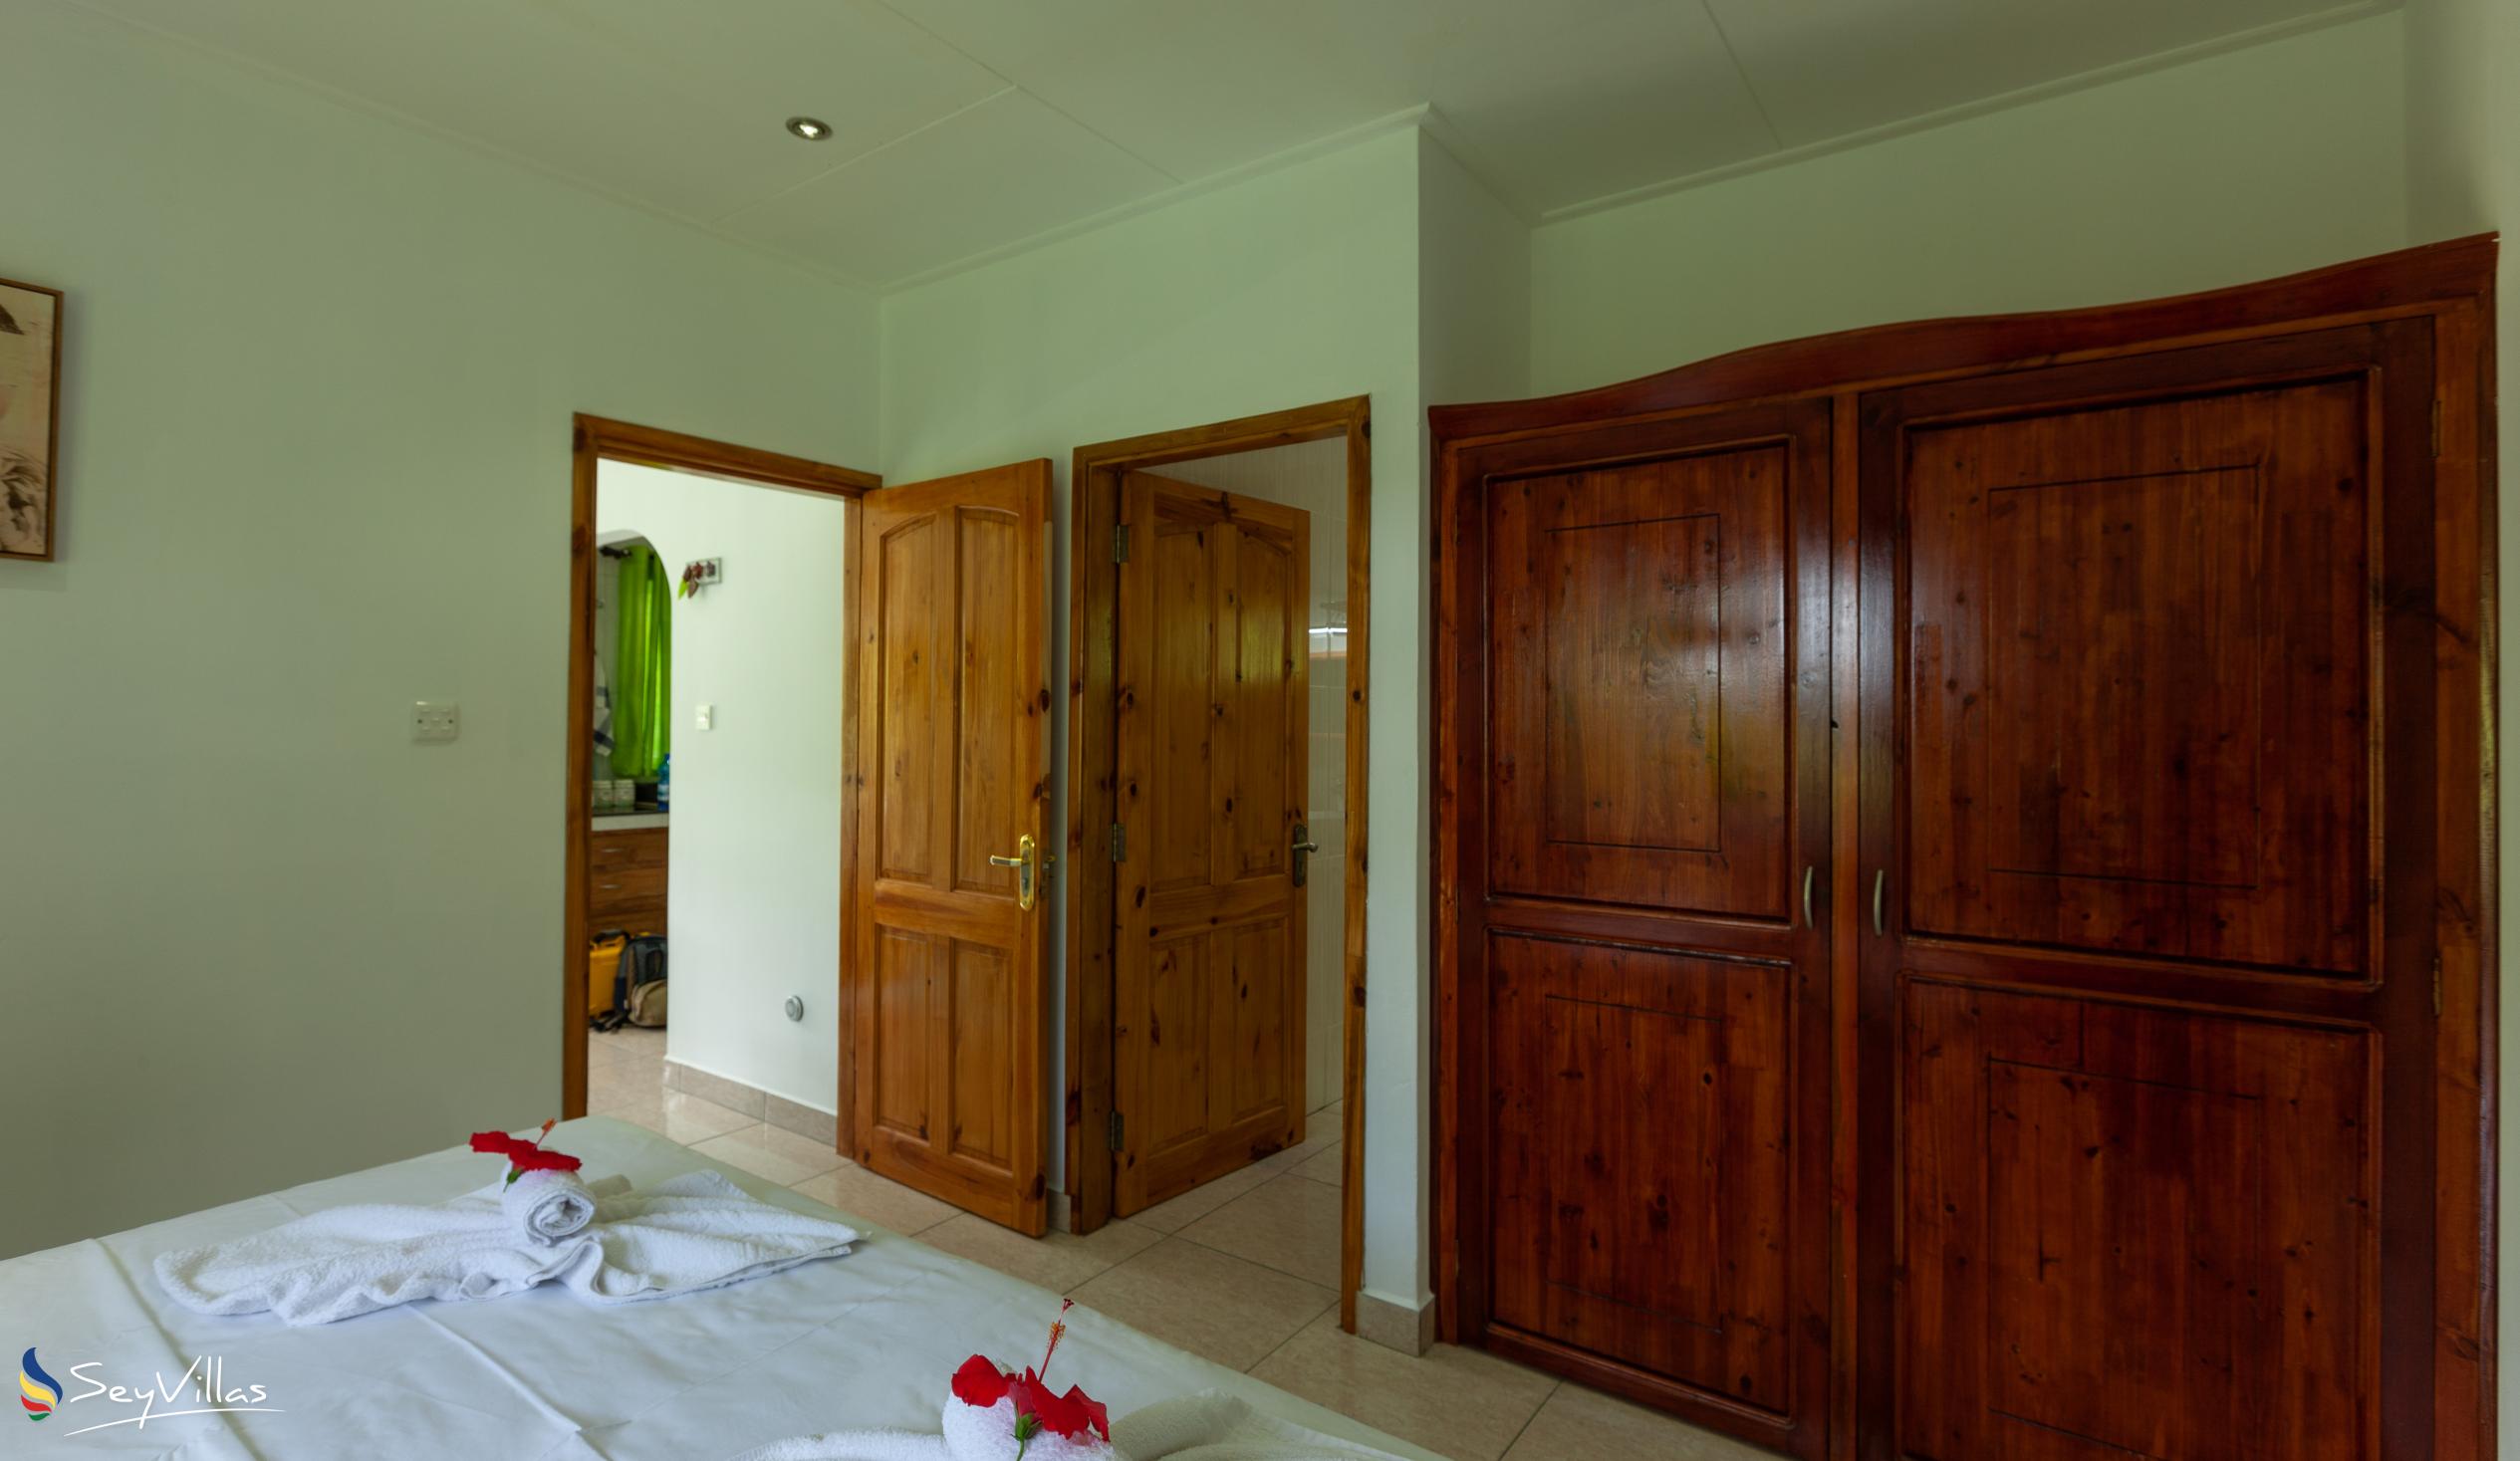 Foto 26: Destination Self-Catering - Villa con 1 camera - Praslin (Seychelles)